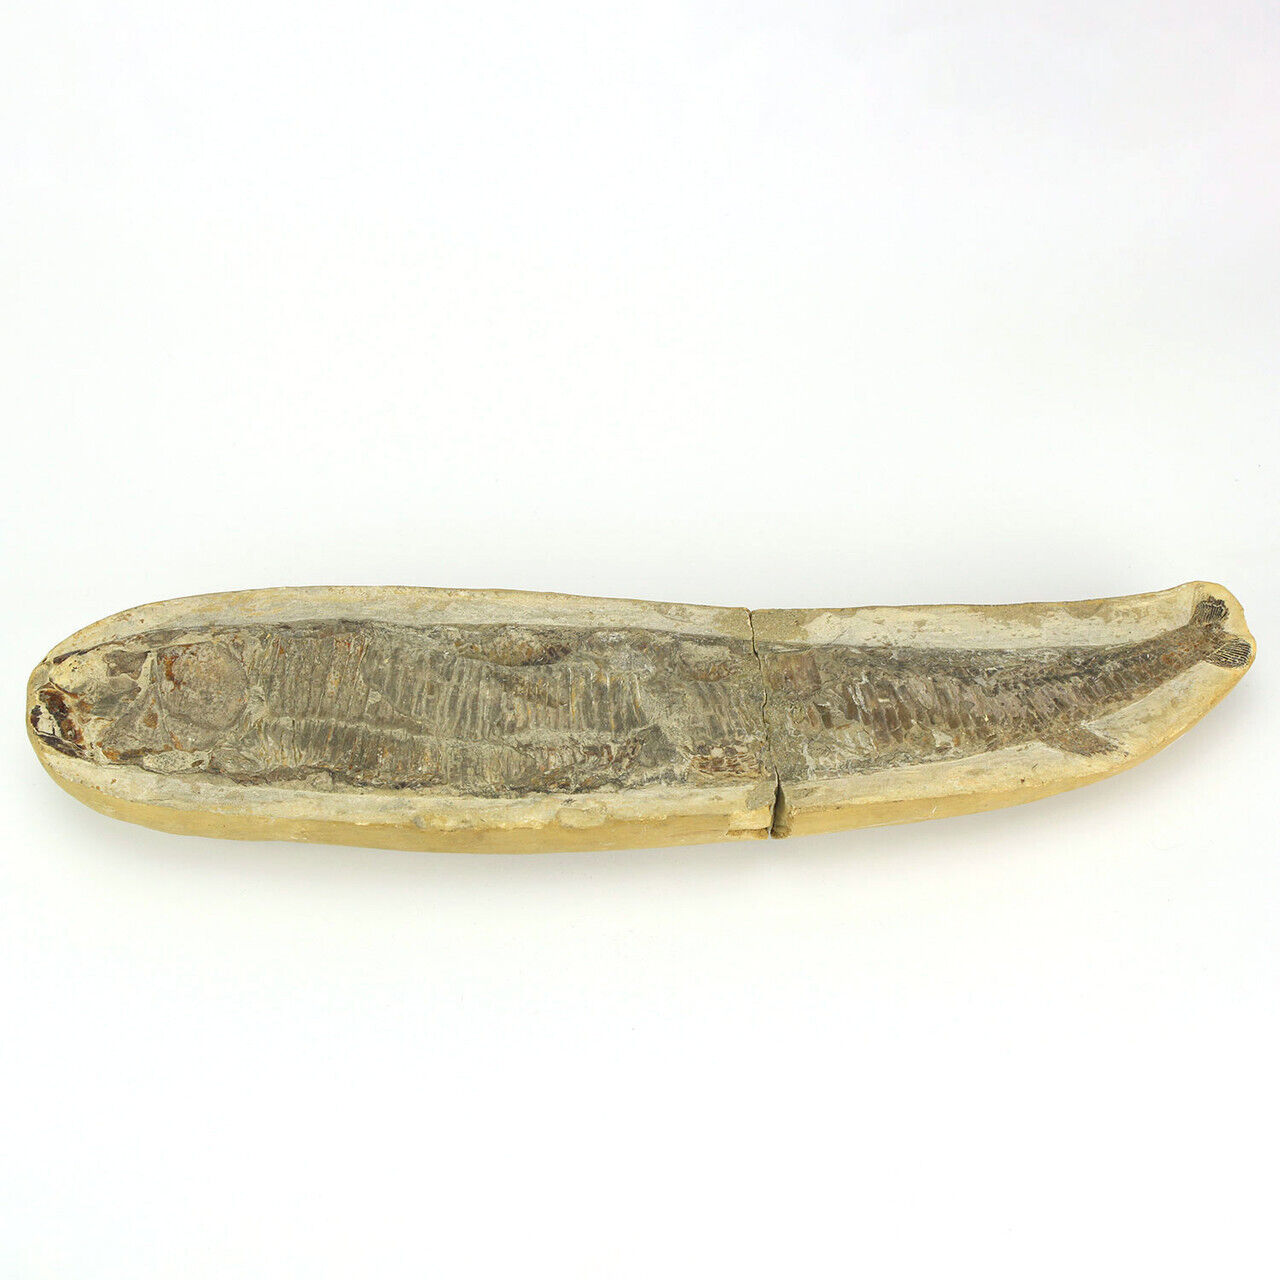 Vinctifer Comptoni Fish Fossil - From Brazil